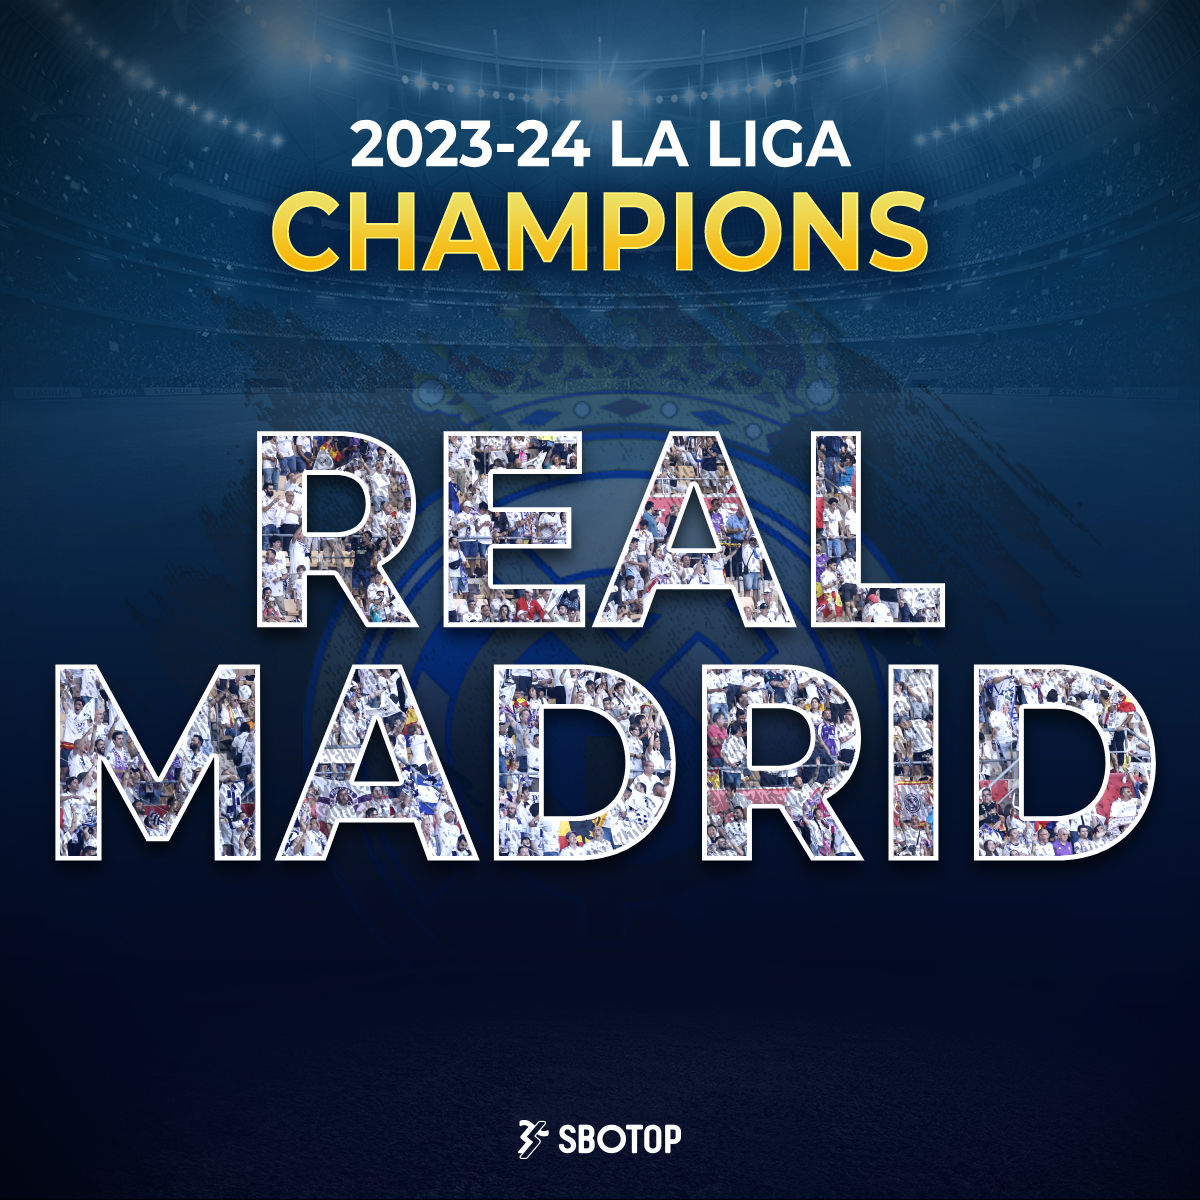 Real Madrid are Champions of Spain 🇪🇸! Congratulations to Los Blancos for winning their 36th La Liga title 🏆 #HalaMadrid #HalaMadridYNadaMas #RealMadrid